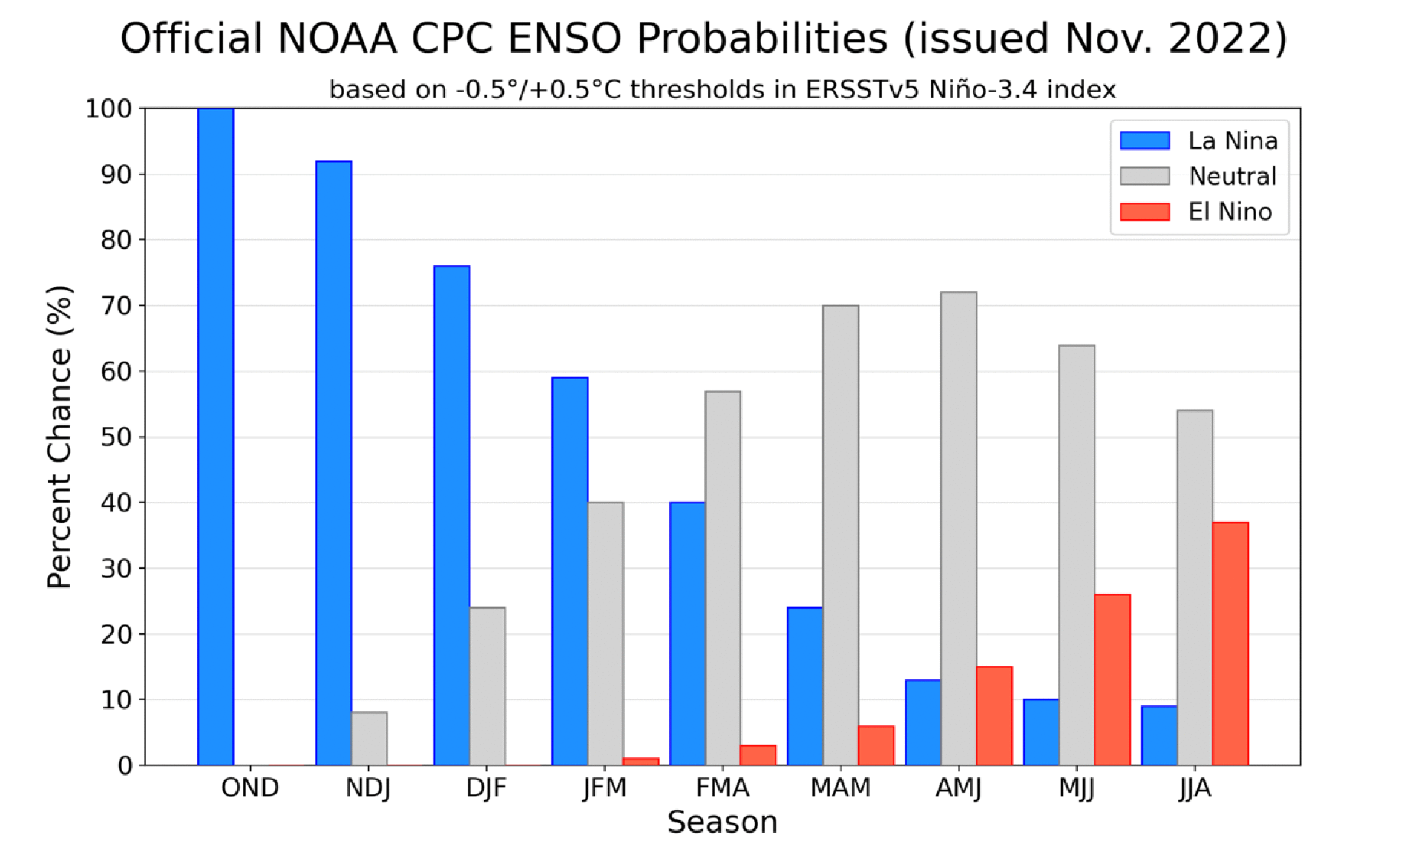 CPC/IRI Probabilistic ENSO Forecast